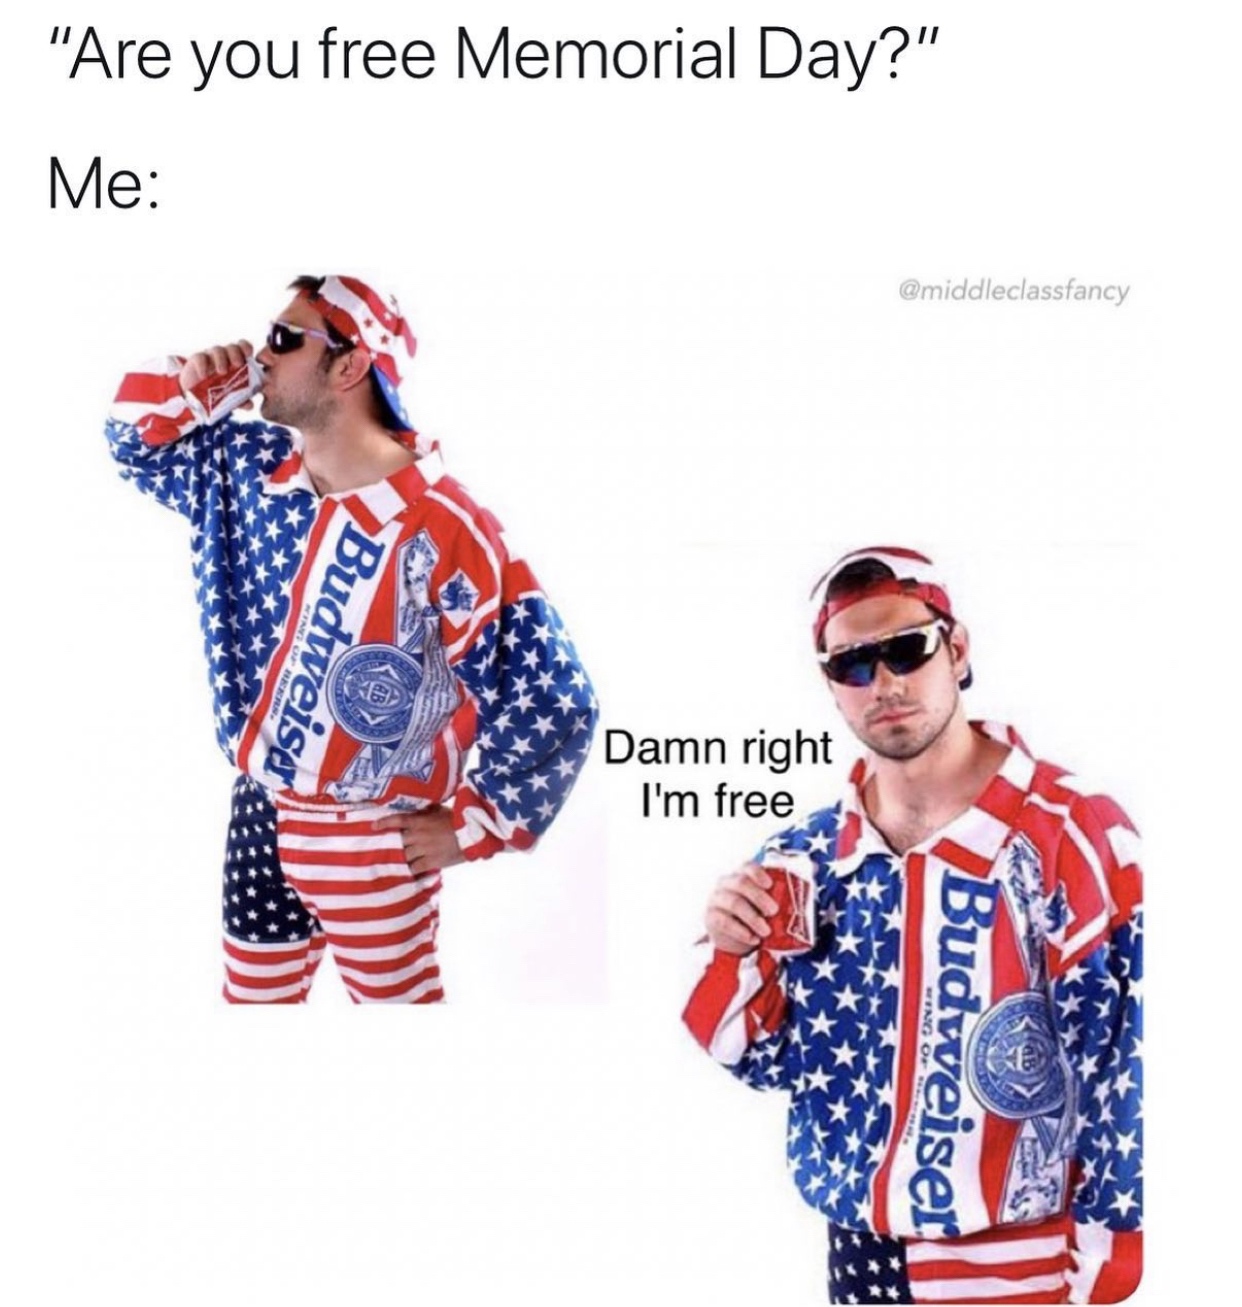 america fudge yeah - "Are you free Memorial Day?" Me Budweiser Damn right I'm free Budweiser